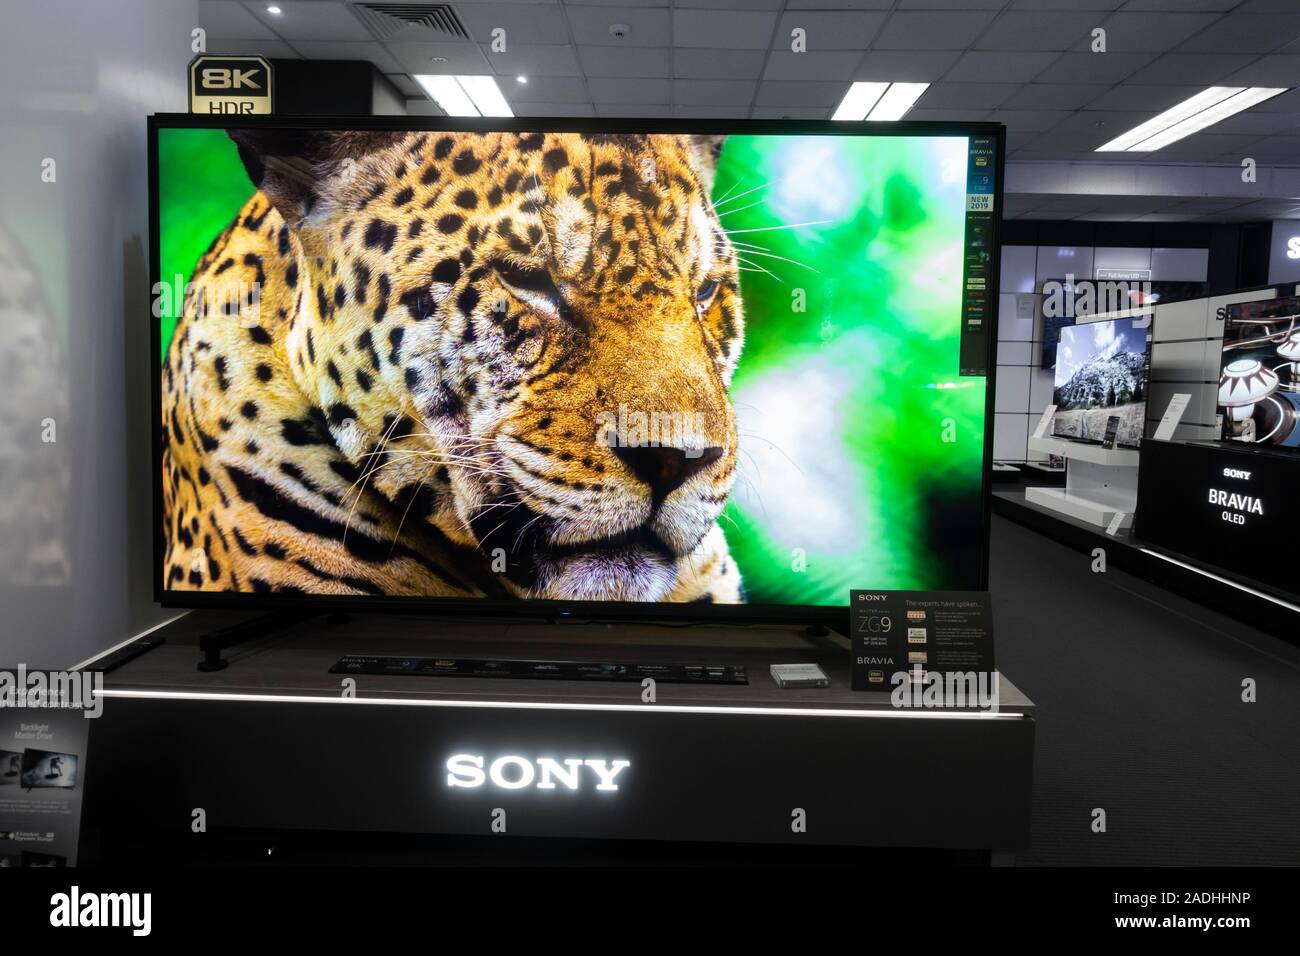 Sony Z9G 8K HDR televisore, schermo TV Foto stock - Alamy